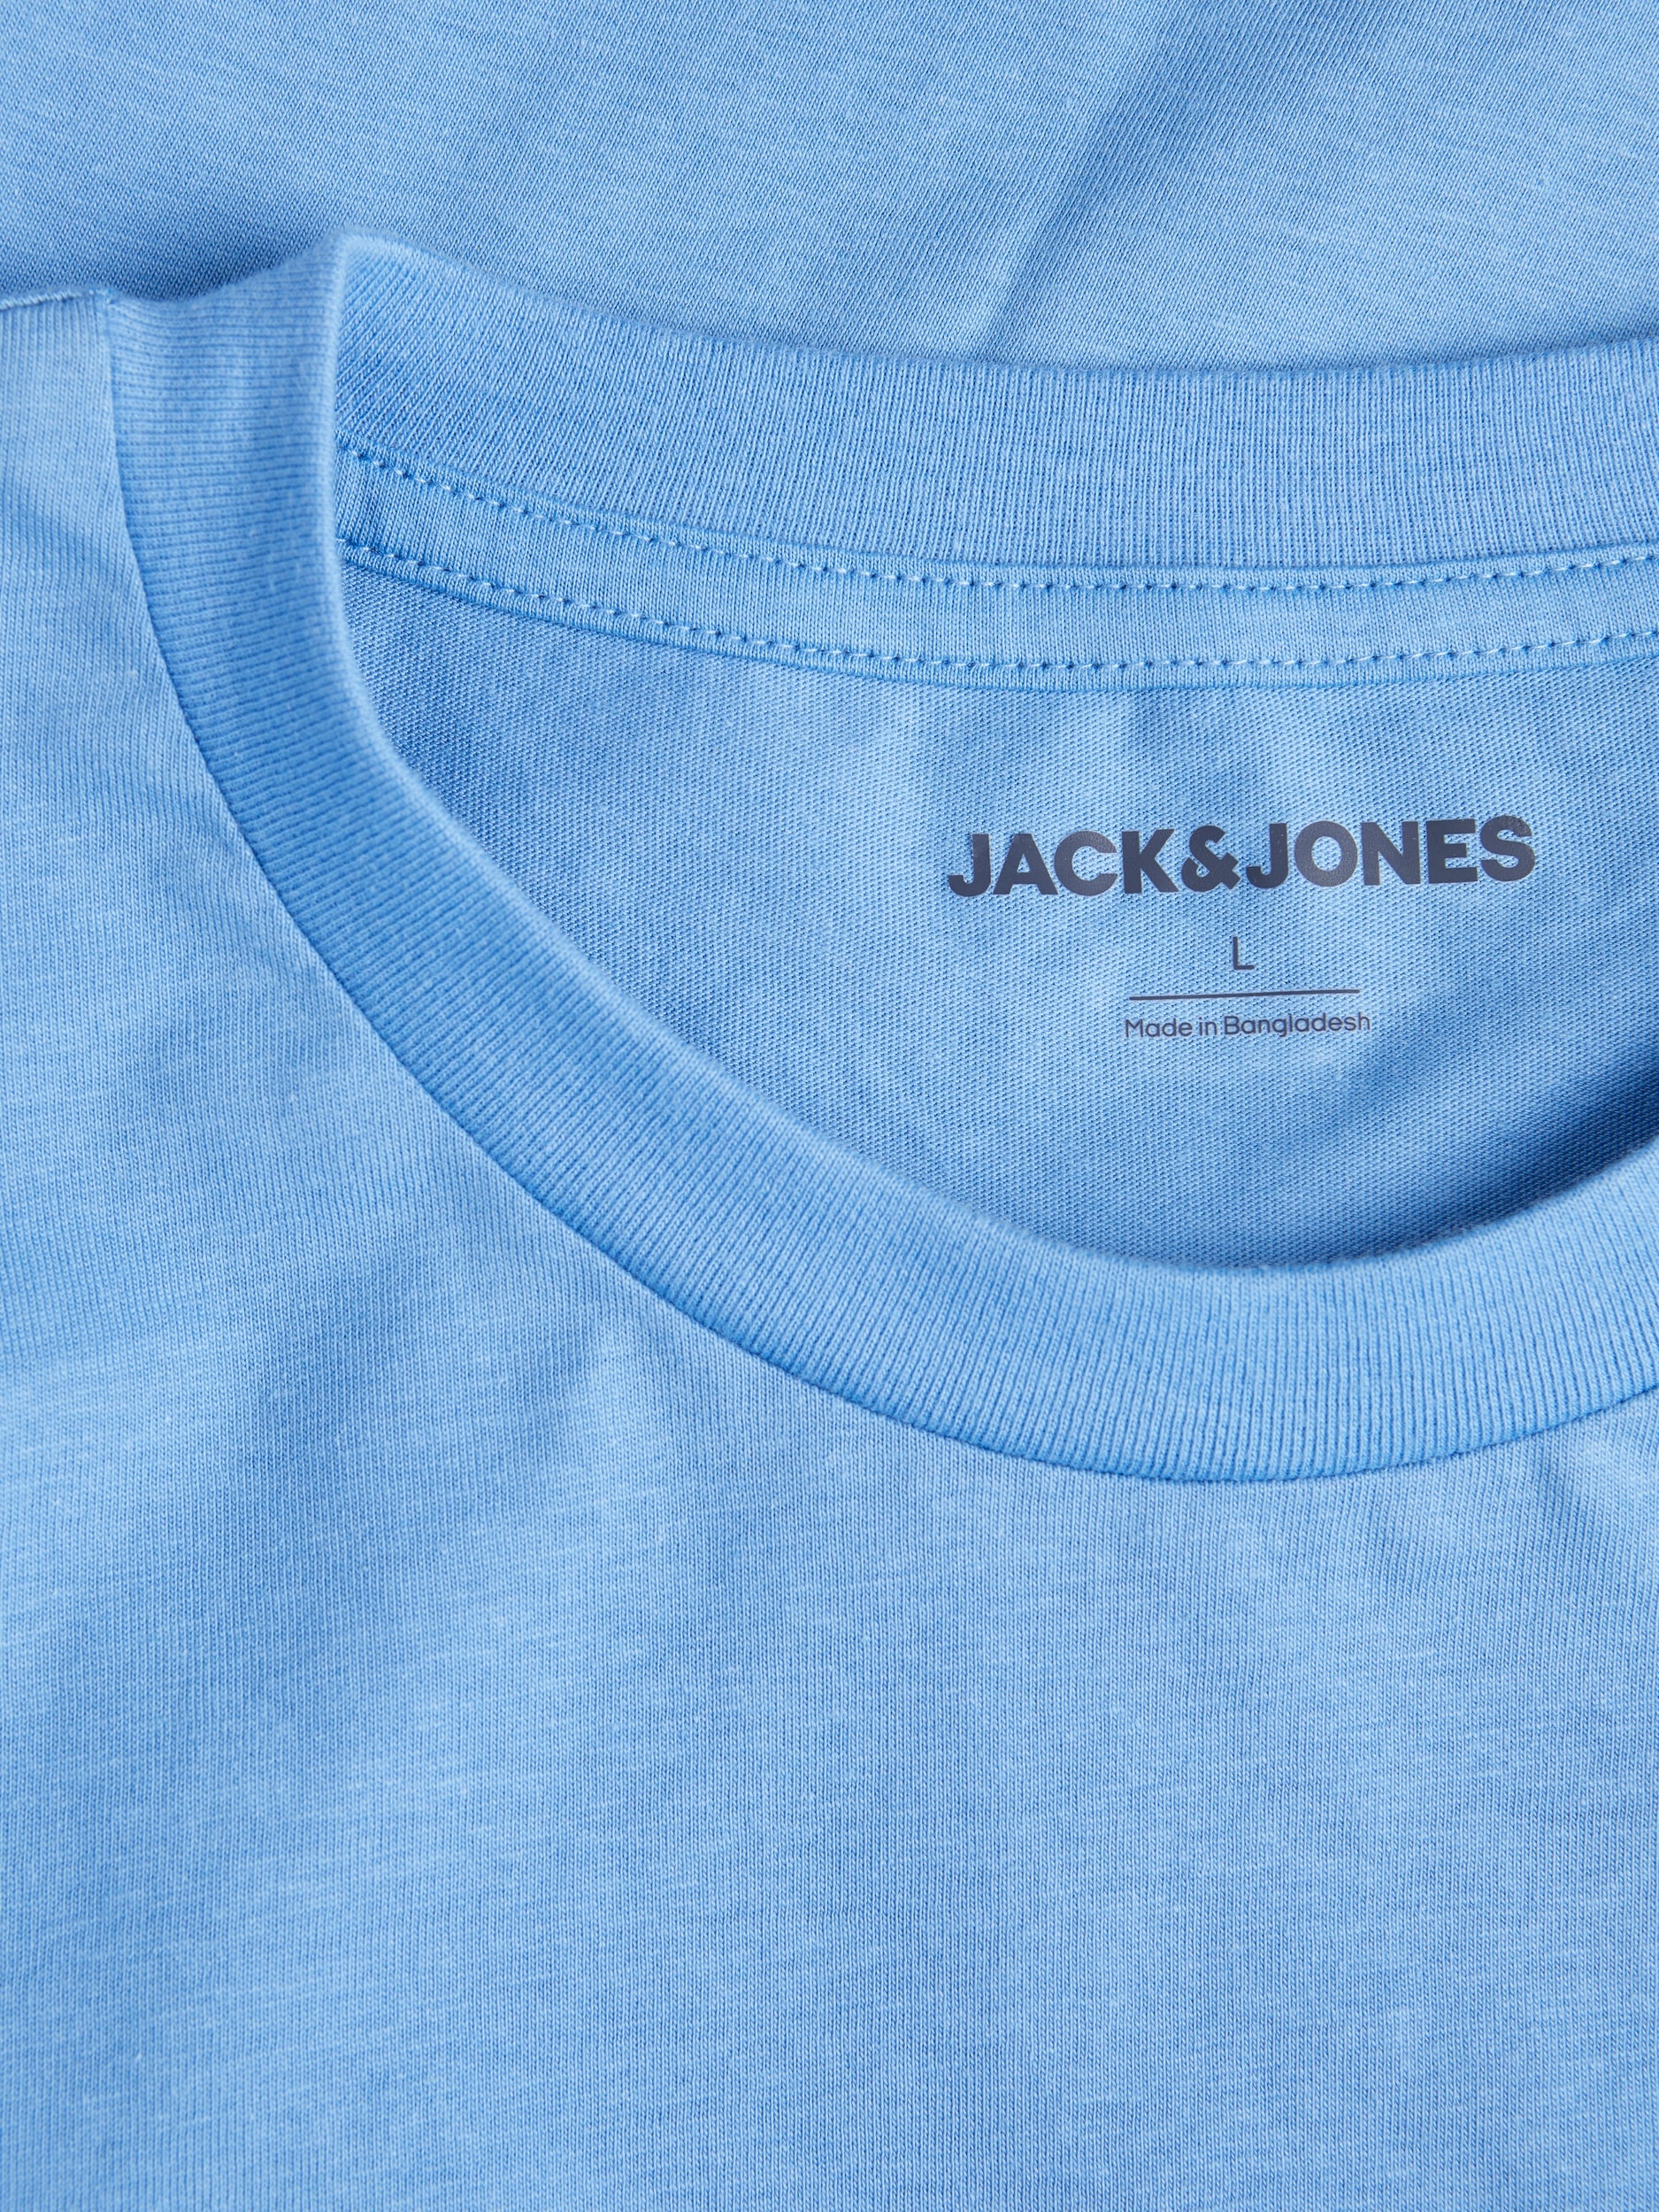 Jack & Jones Gale Tee Pacific Coast Blue - Raw Menswear